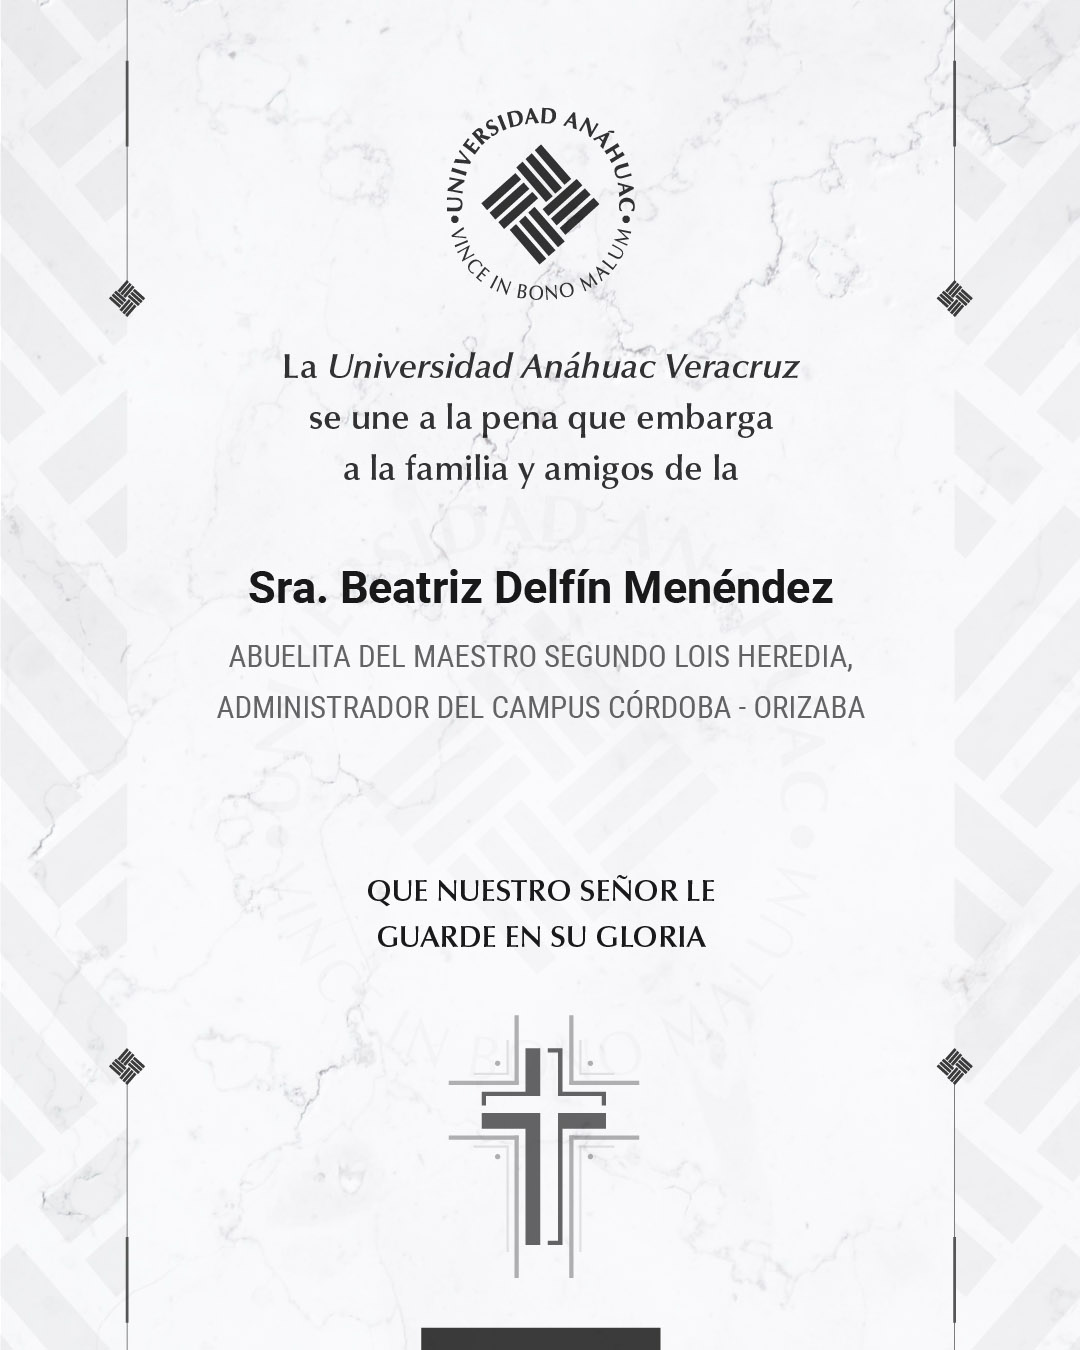 6 / 10 - Sra. Beatriz Delfín Menéndez